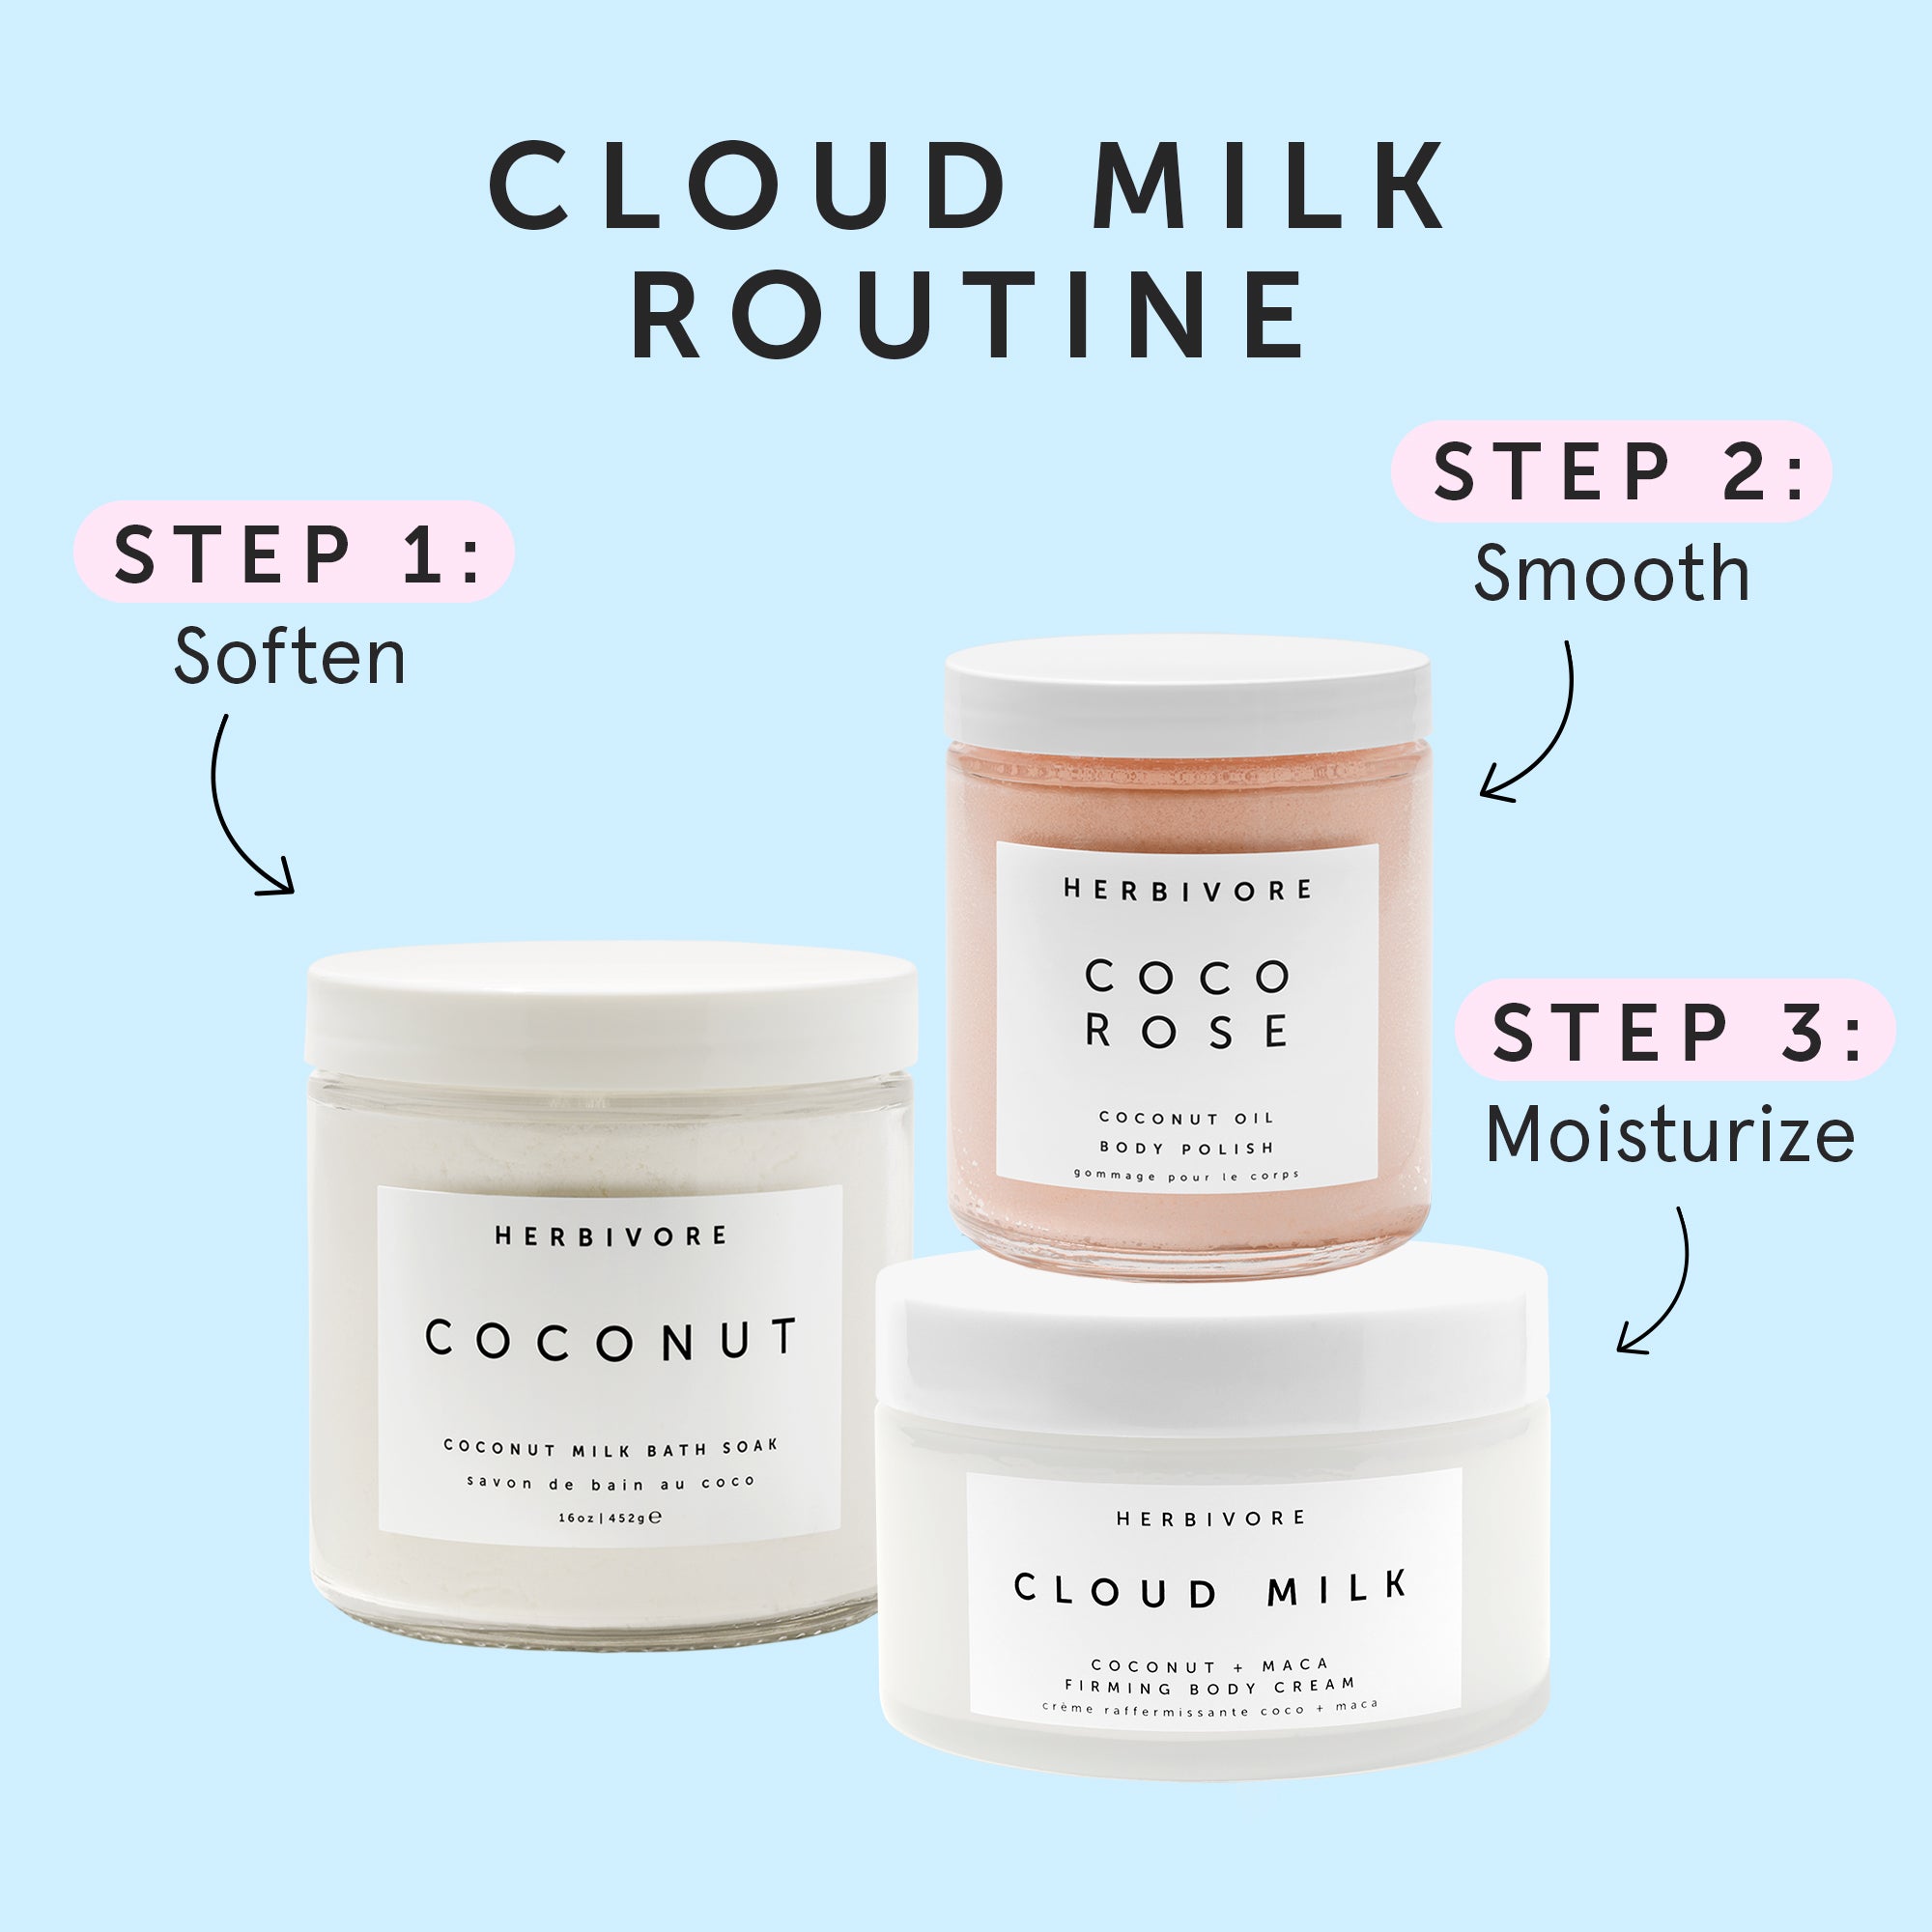 Herbivore Cloud Milk Coconut + Maca Firming Body Cream at Socialite Beauty Canada